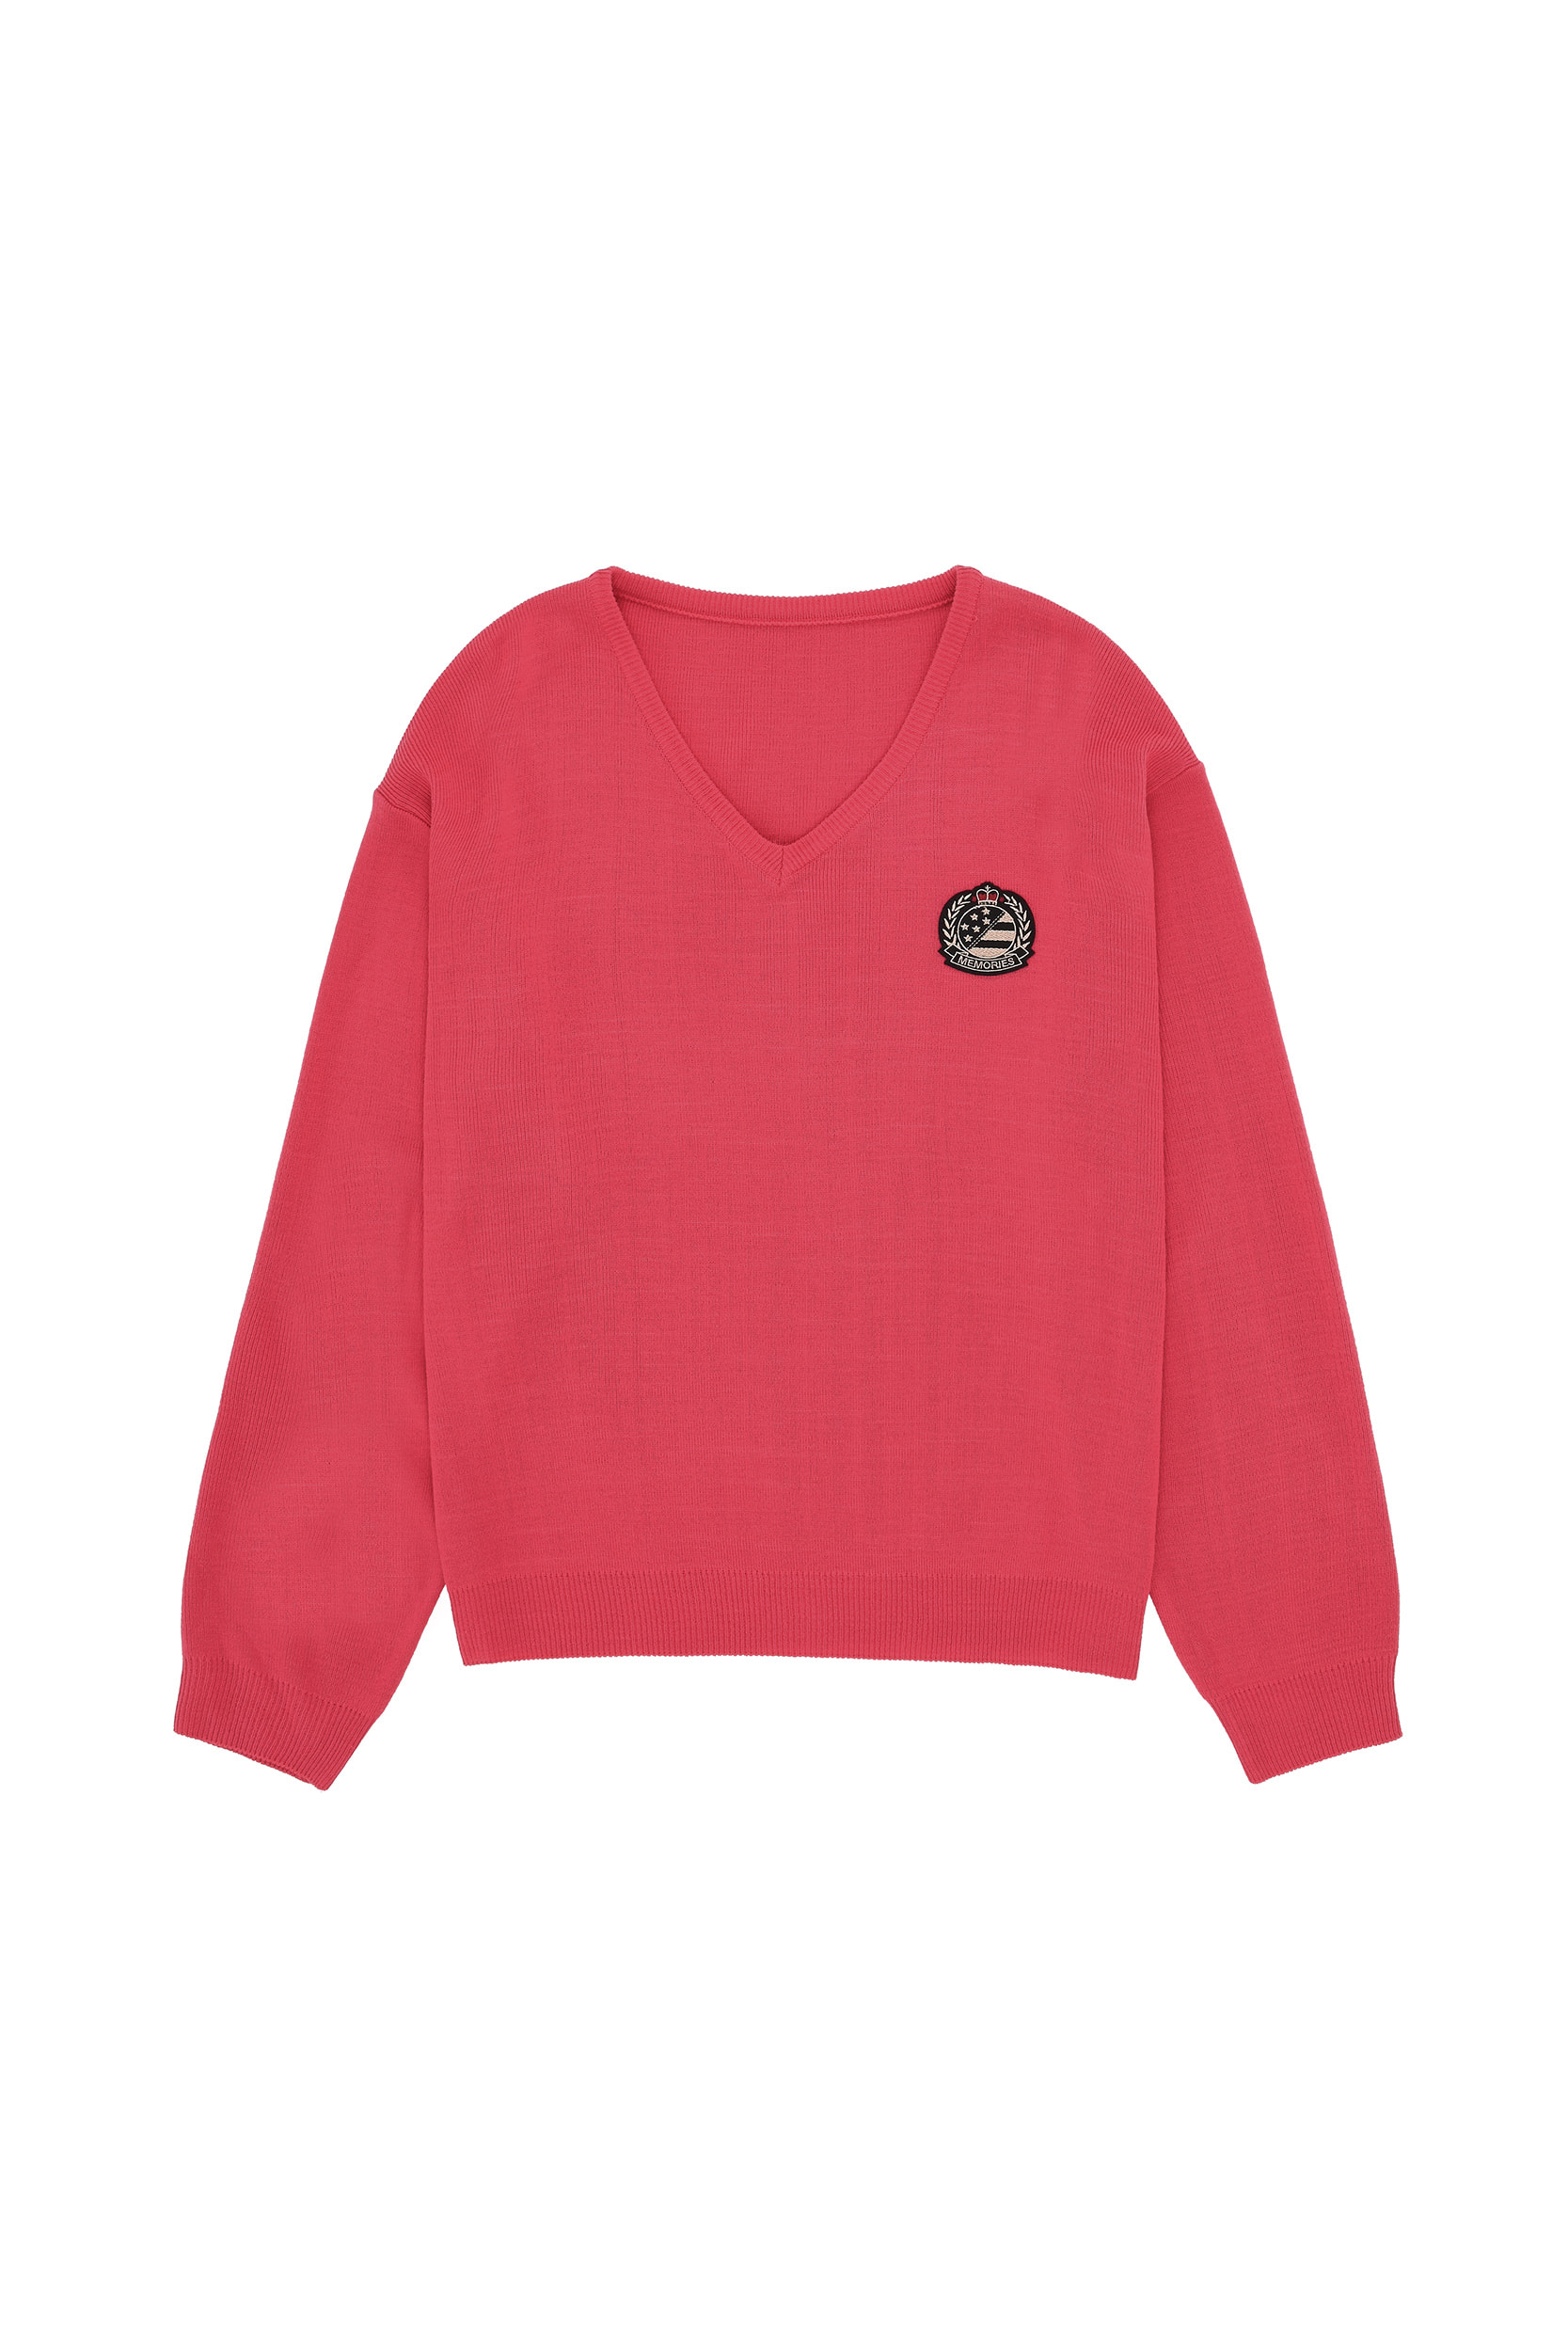 memories emblem knit(coral pink)